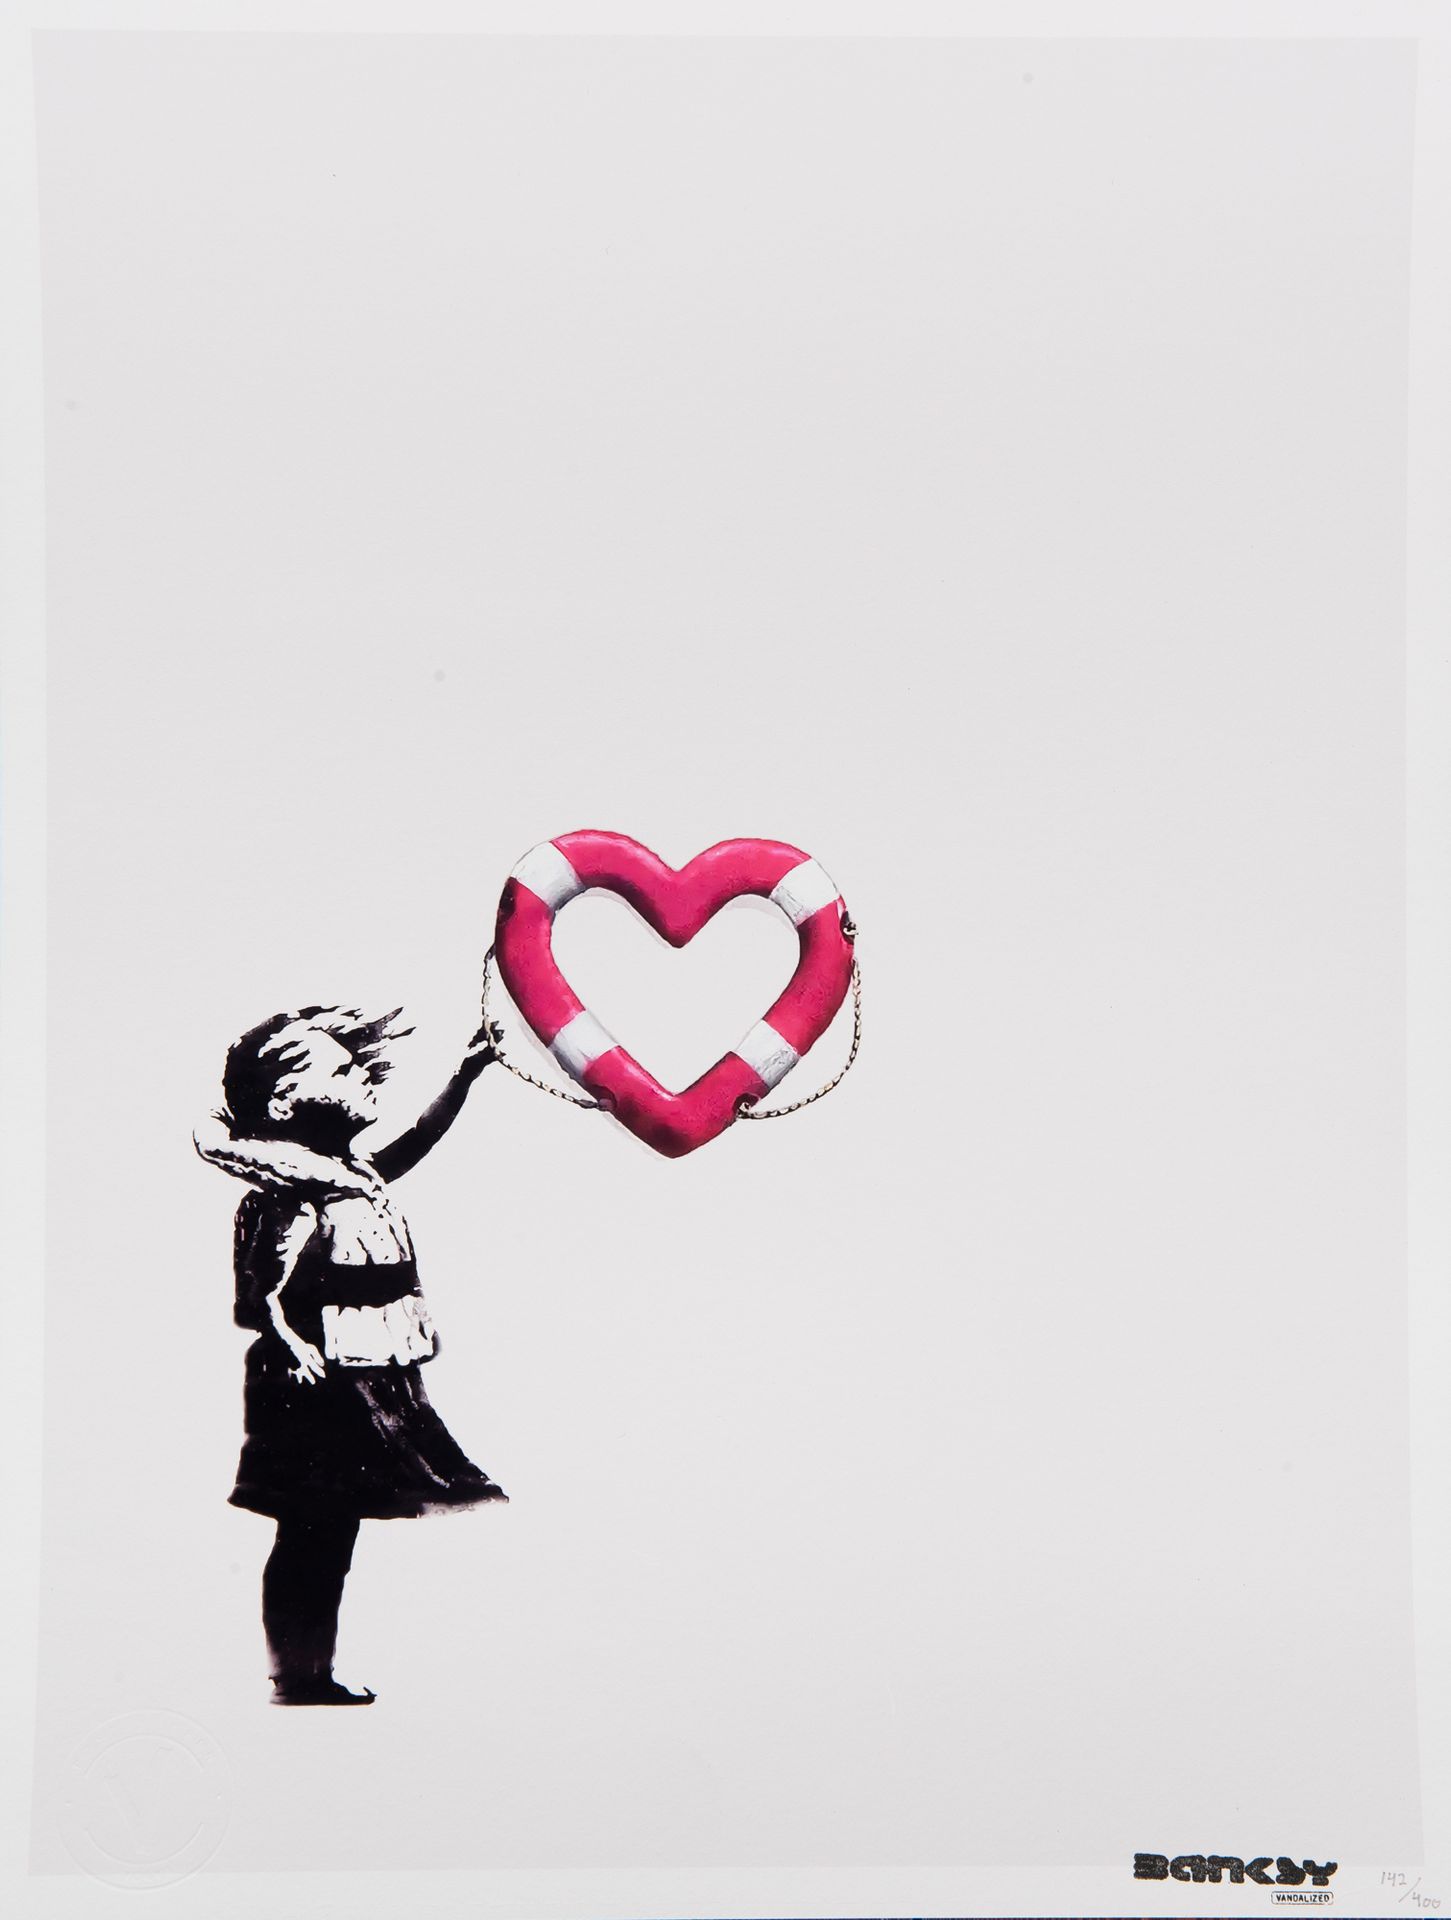 BANKSY (né en 1974) D'APRES & POST MODERN VANDAL Girl with heart shaped float.
S&hellip;